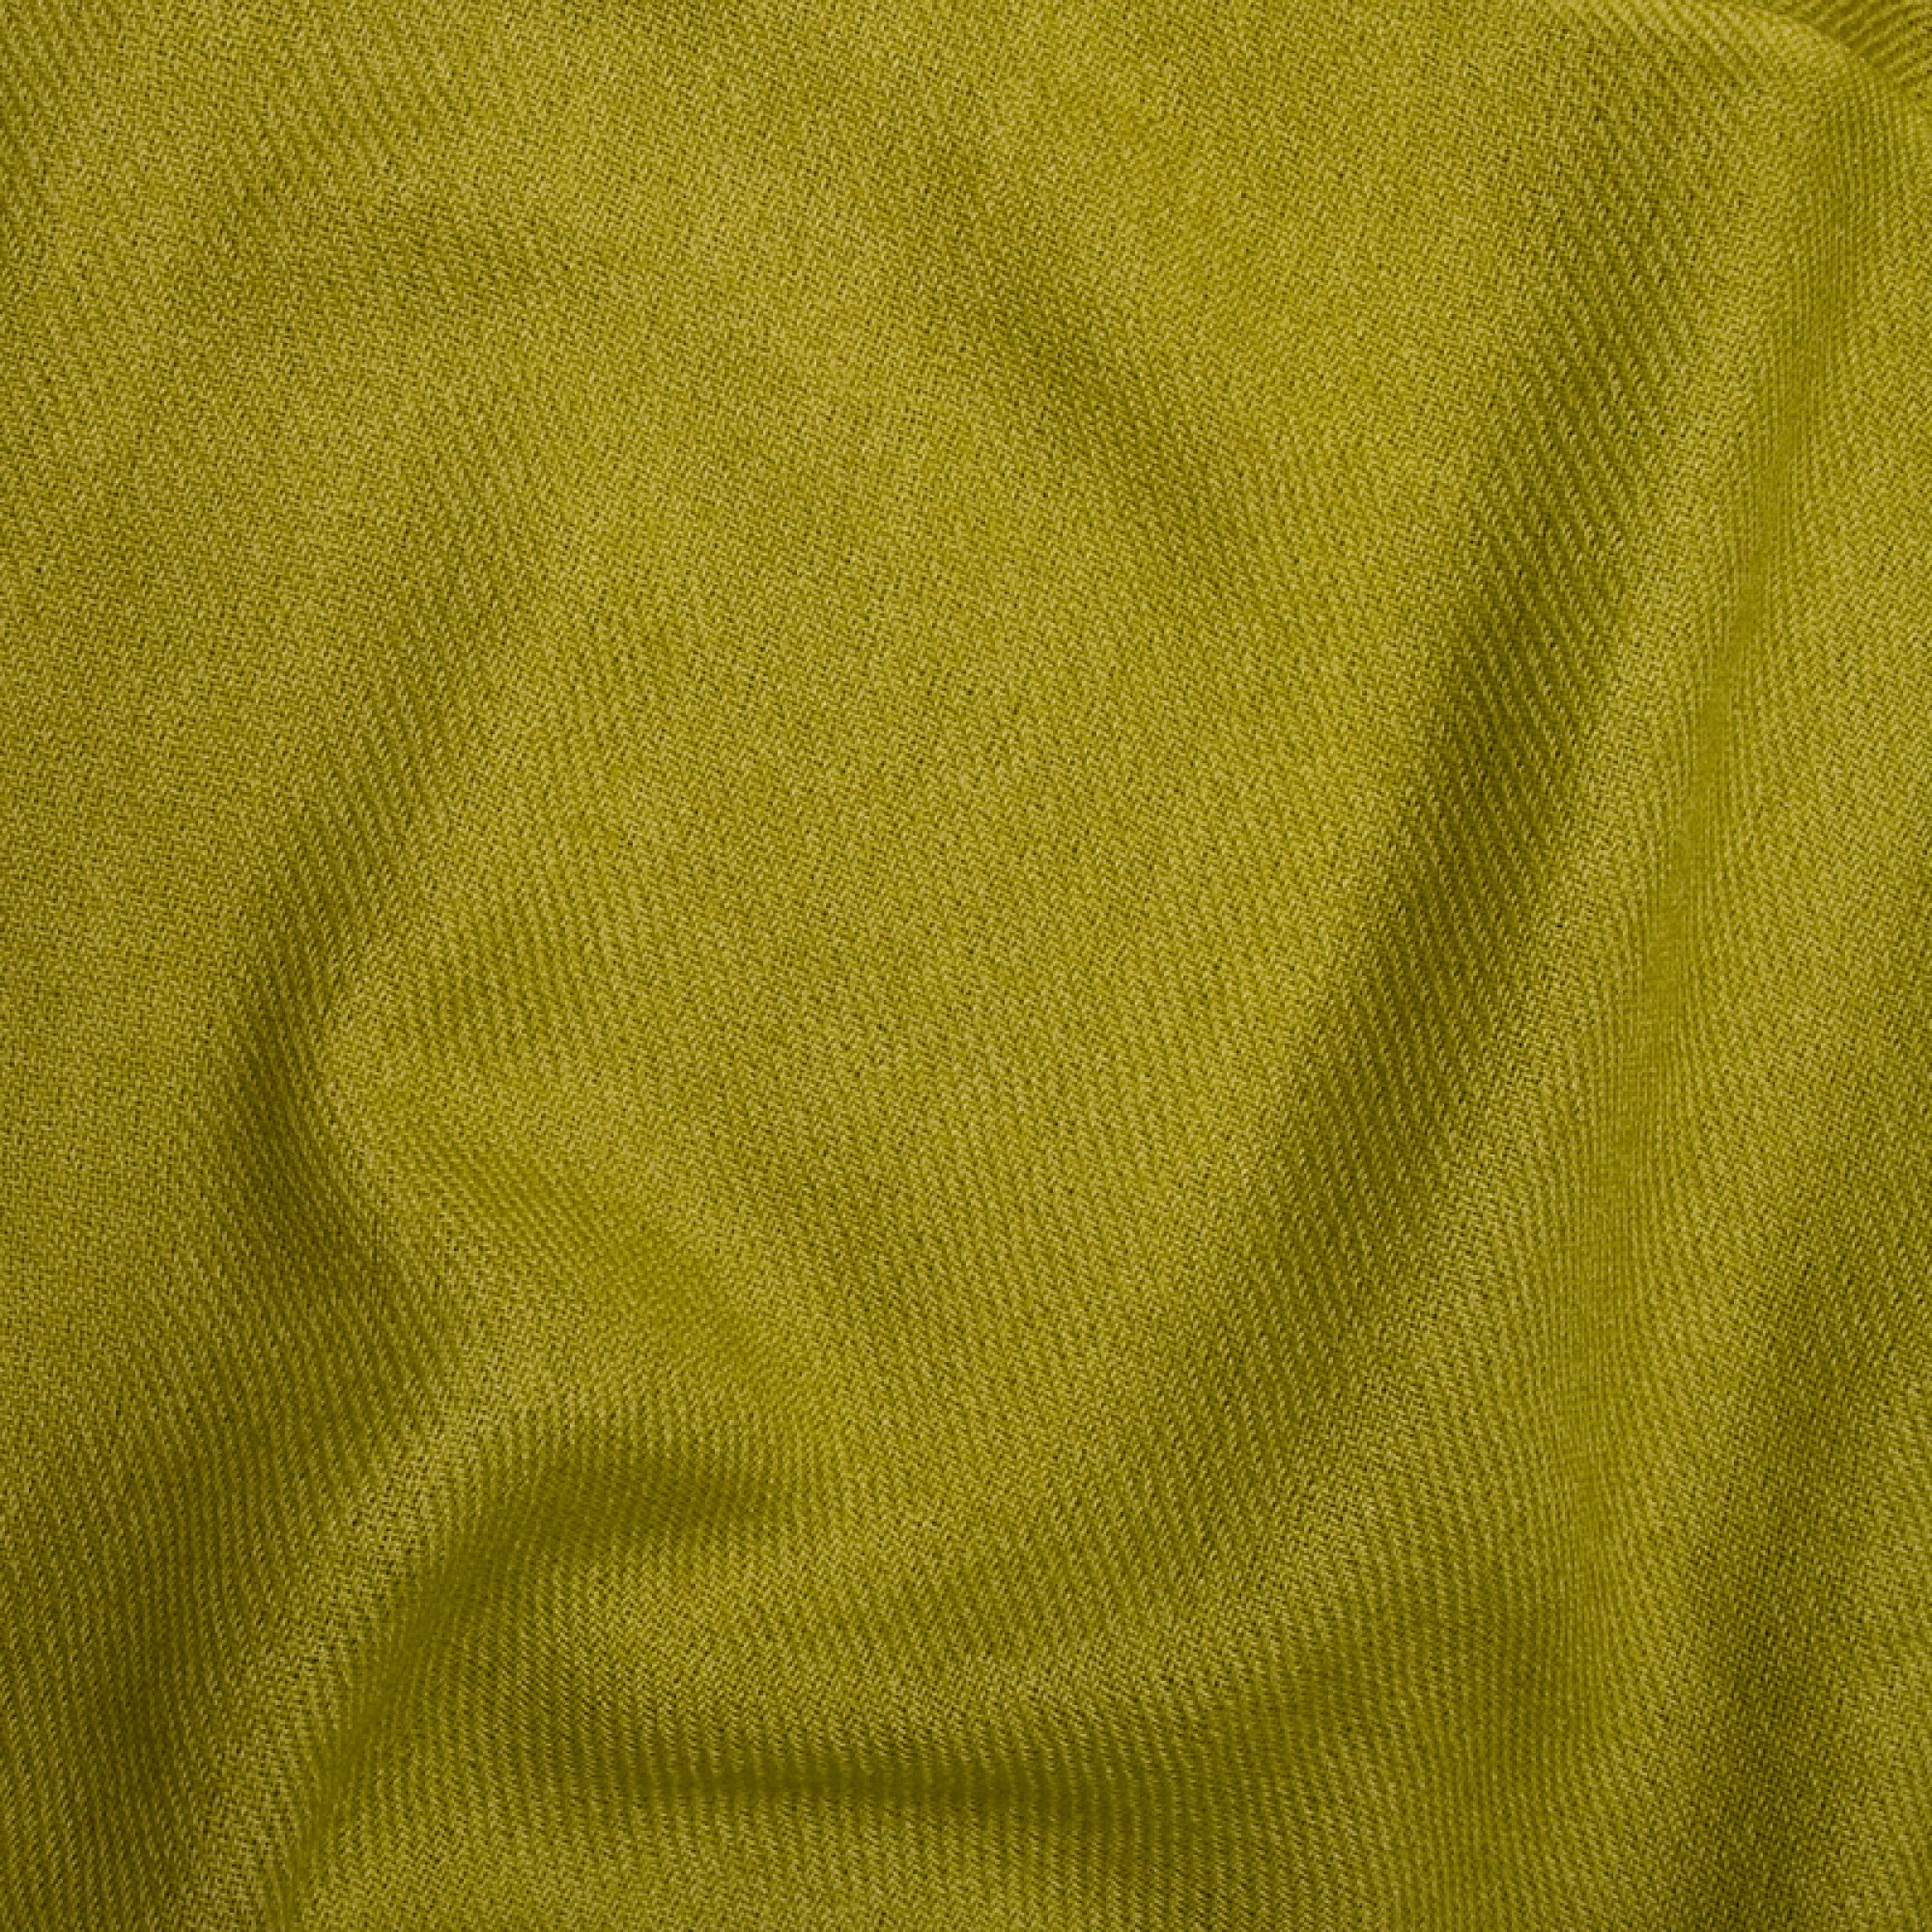 Cachemire pull homme toodoo plain l 220 x 220 vert petillant 220x220cm